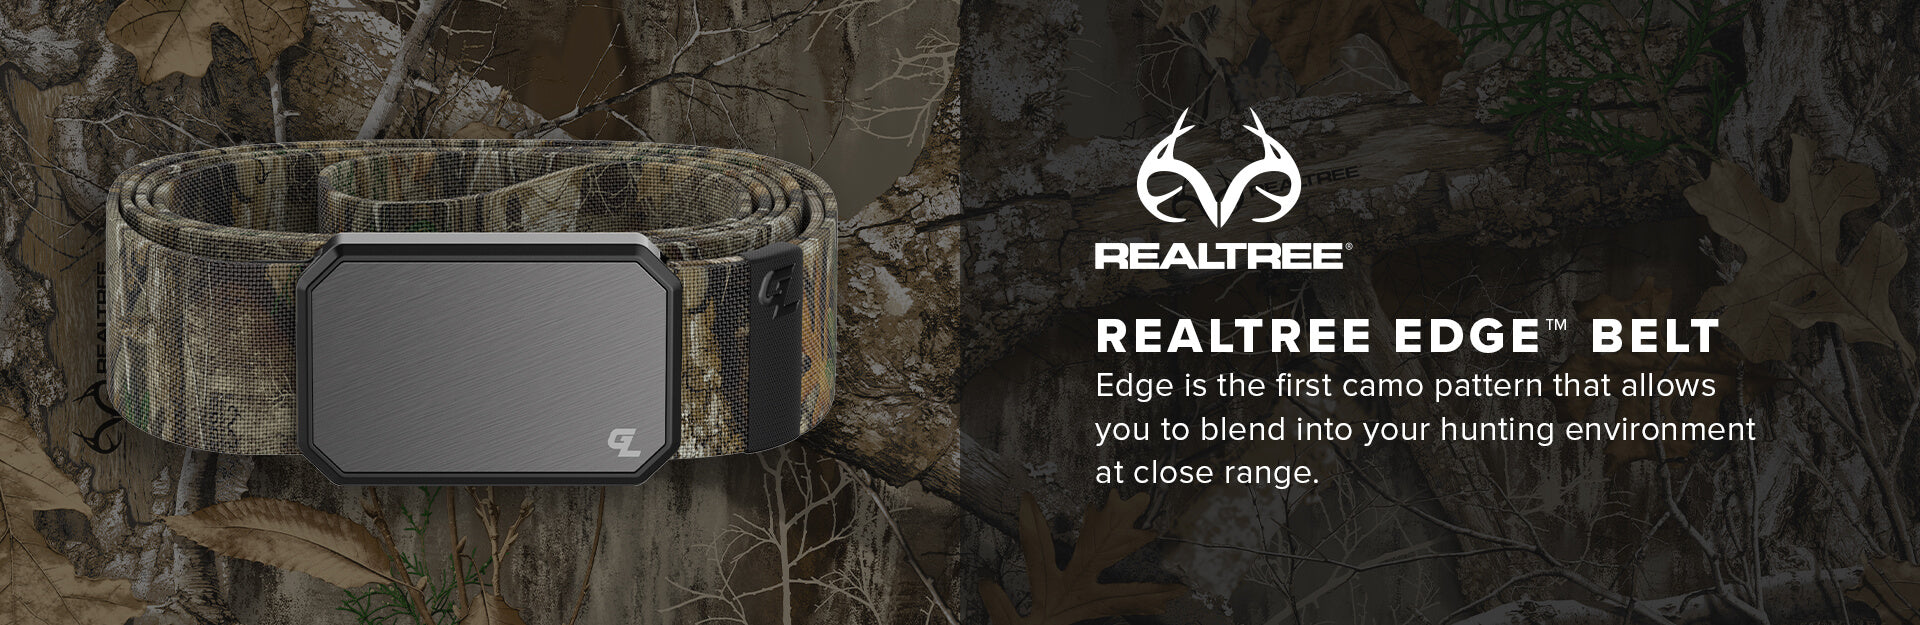 realtree edge belt